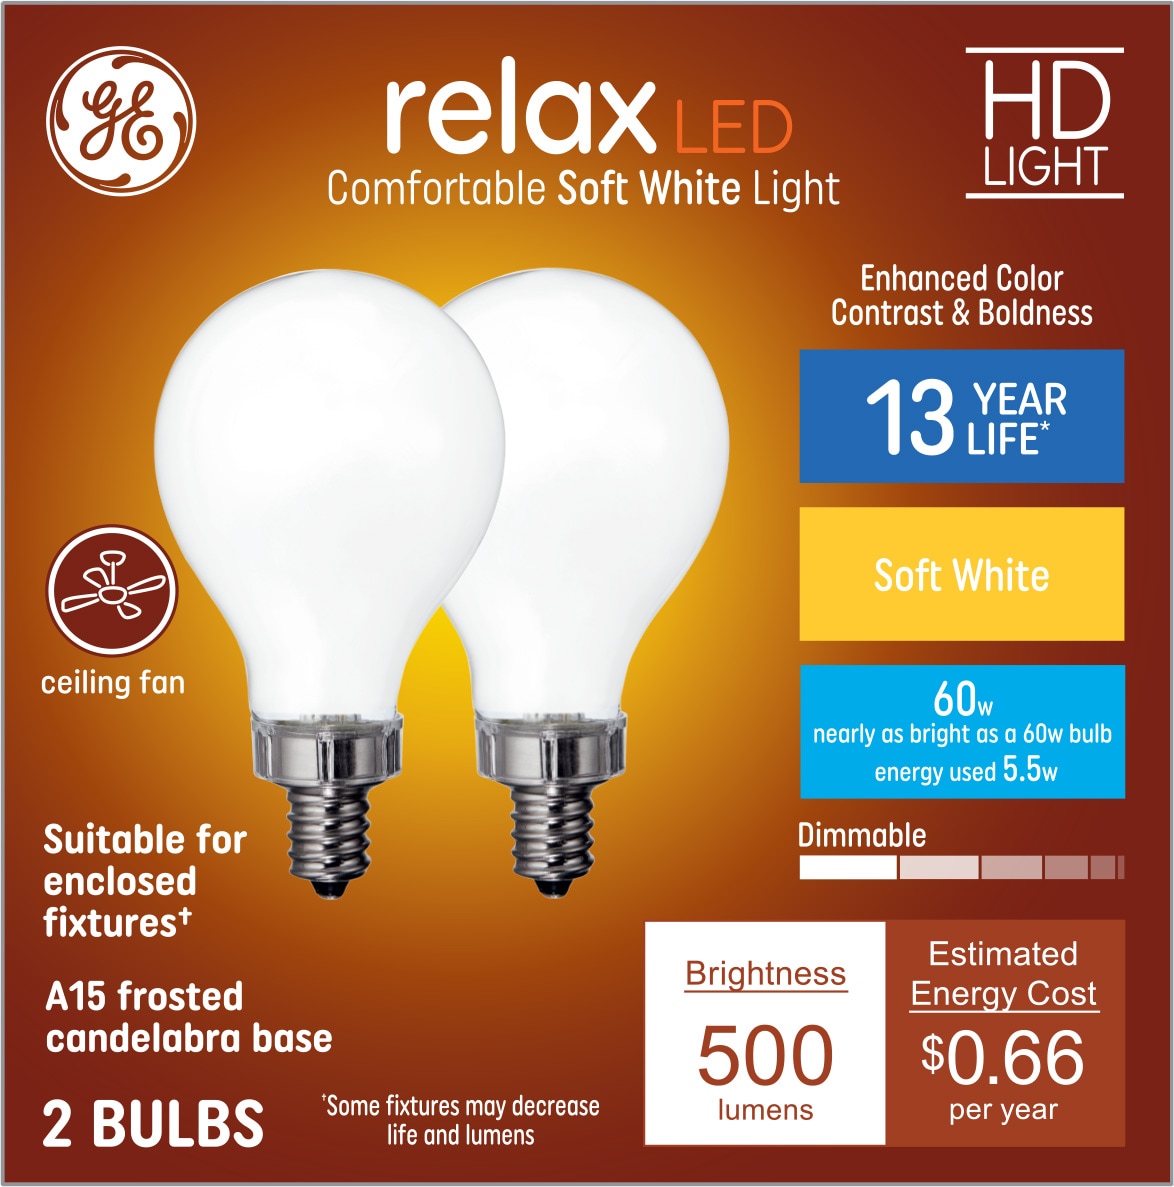 Vintage LED Night Light Bulb - C7 LED Candelabra Bulb with Filament LED and  Blunt Tip - 5W Equivalent - 53 Lumens